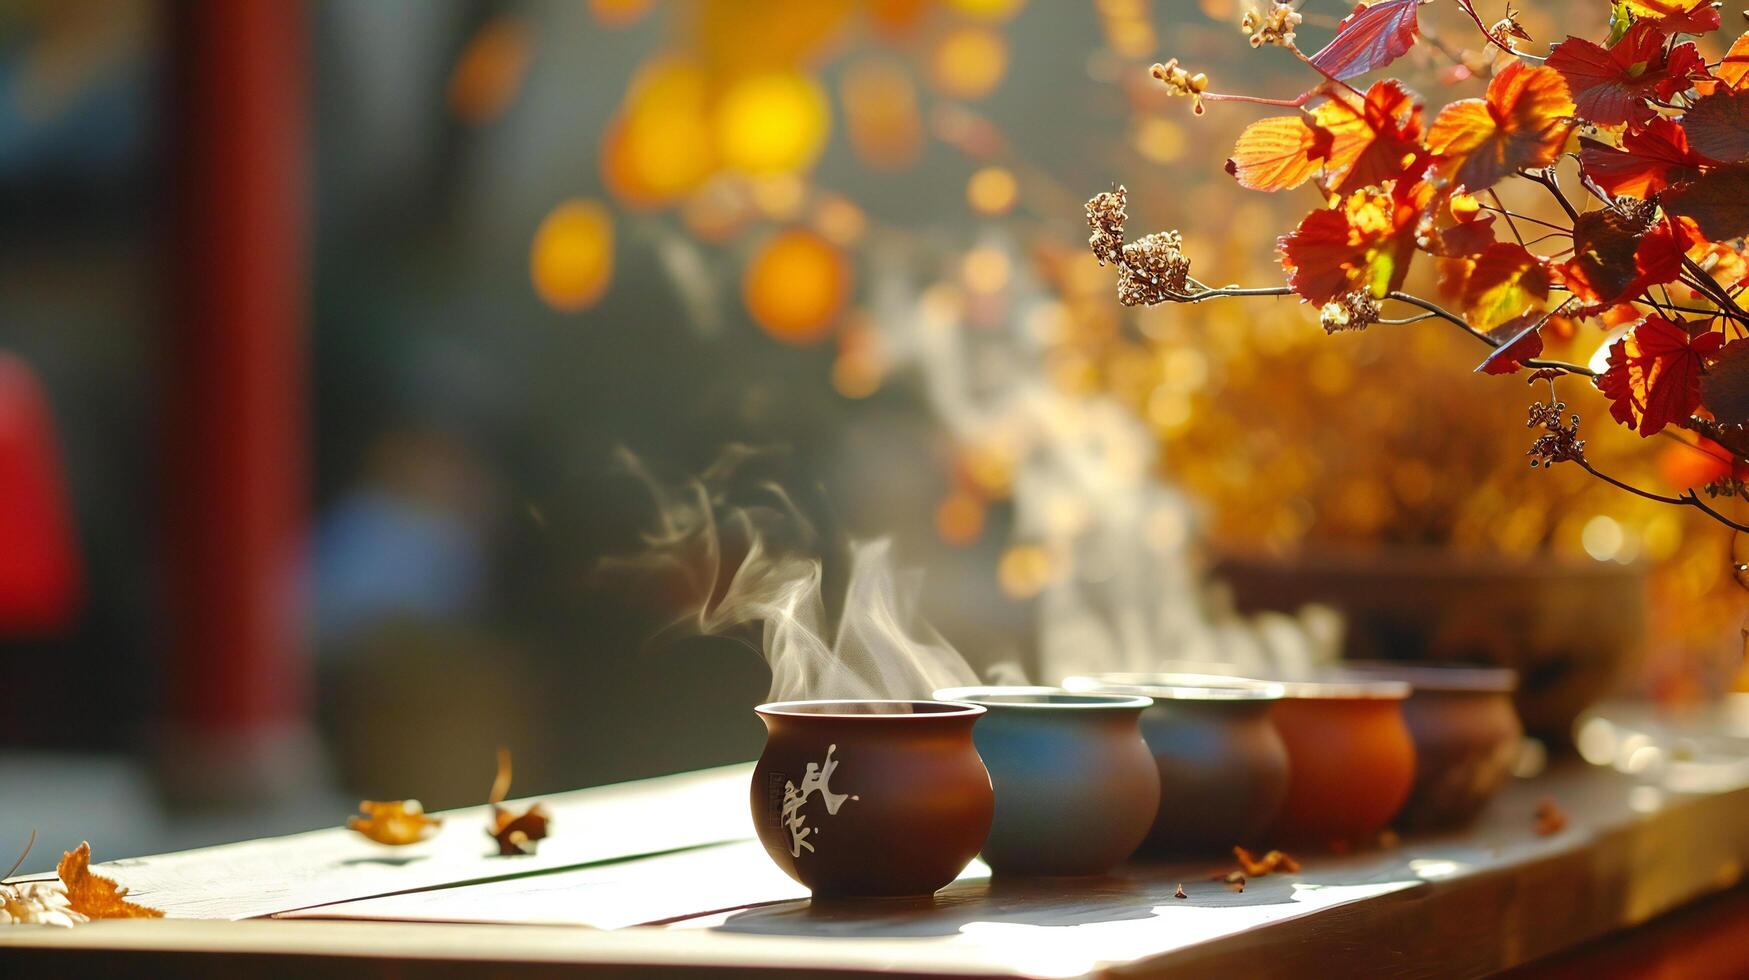 AI generated Warm Autumn Tea Service on Wooden Table Outdoors photo